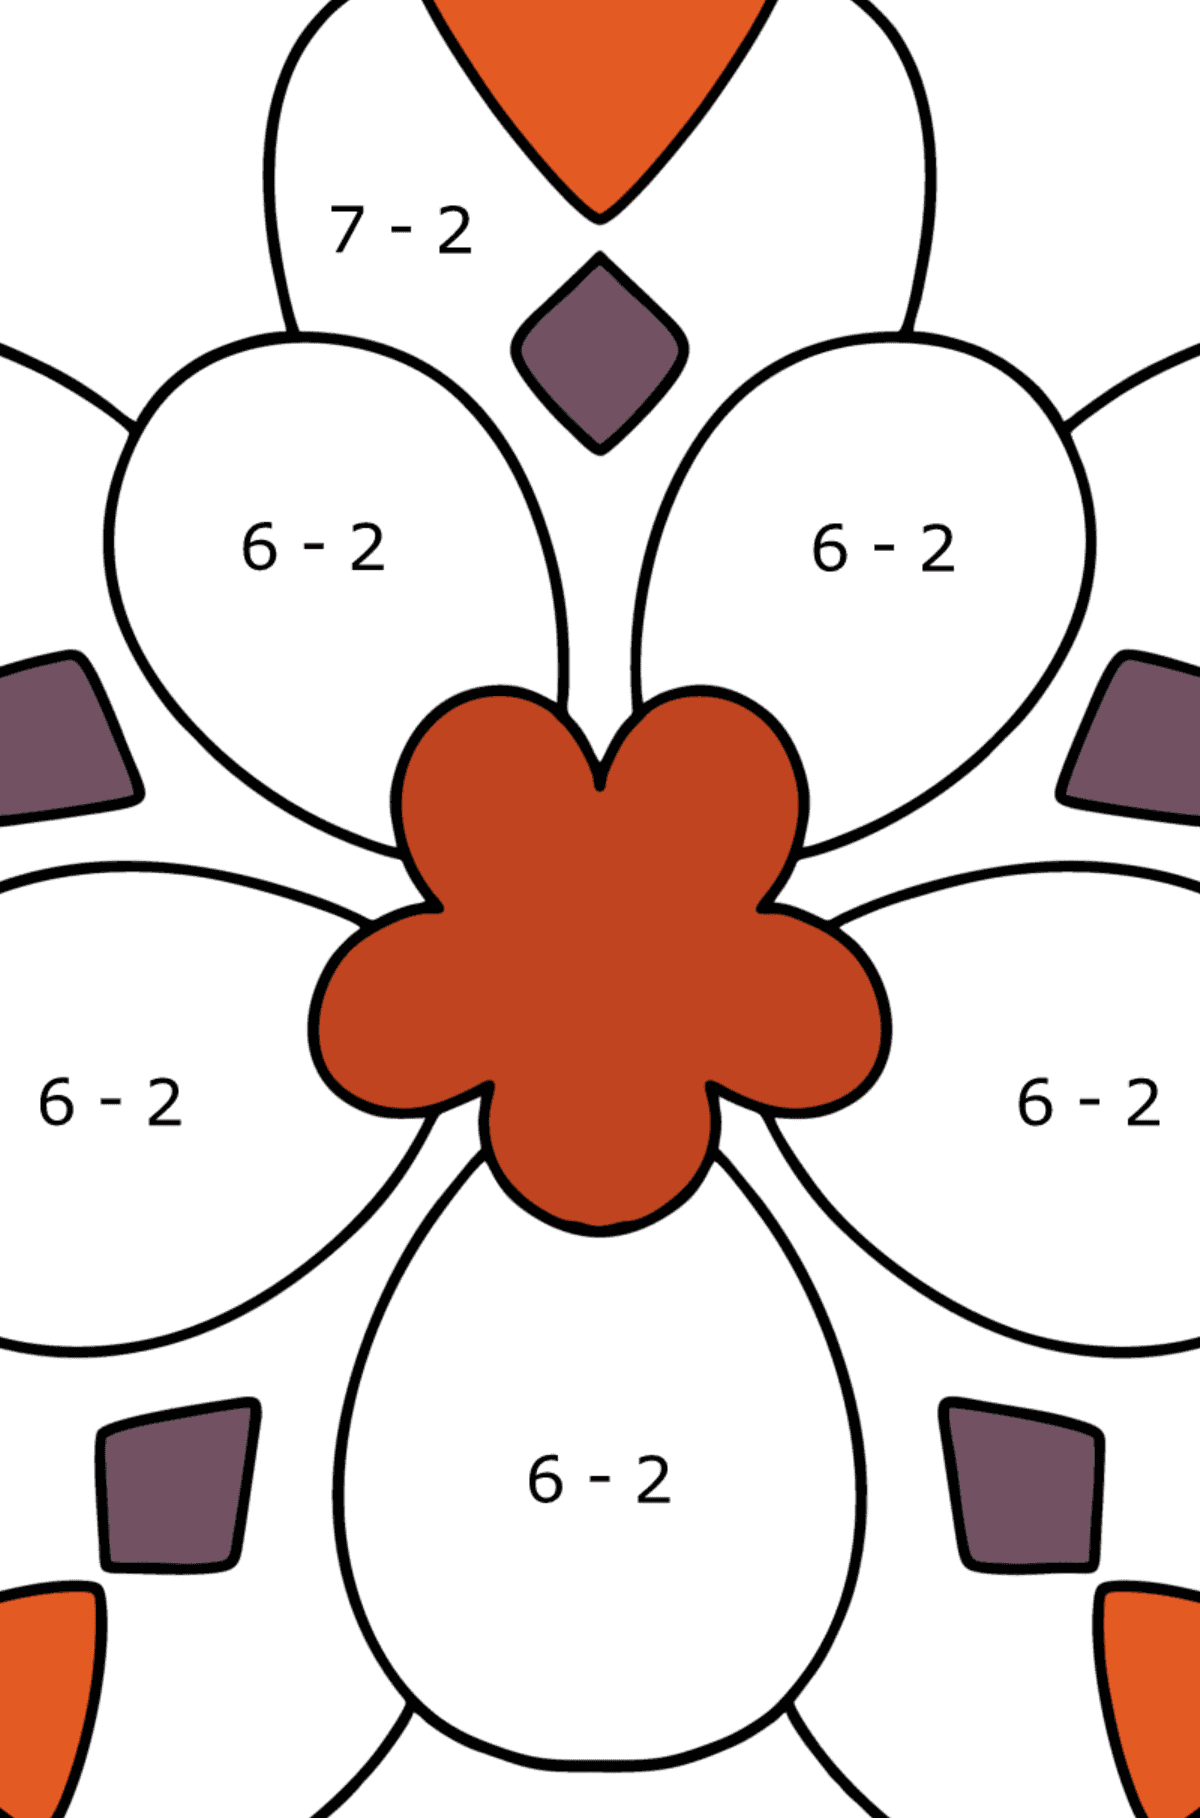 Ausmalbild Mandala Blume für Kinder - Mathe Ausmalbilder - Subtraktion für Kinder